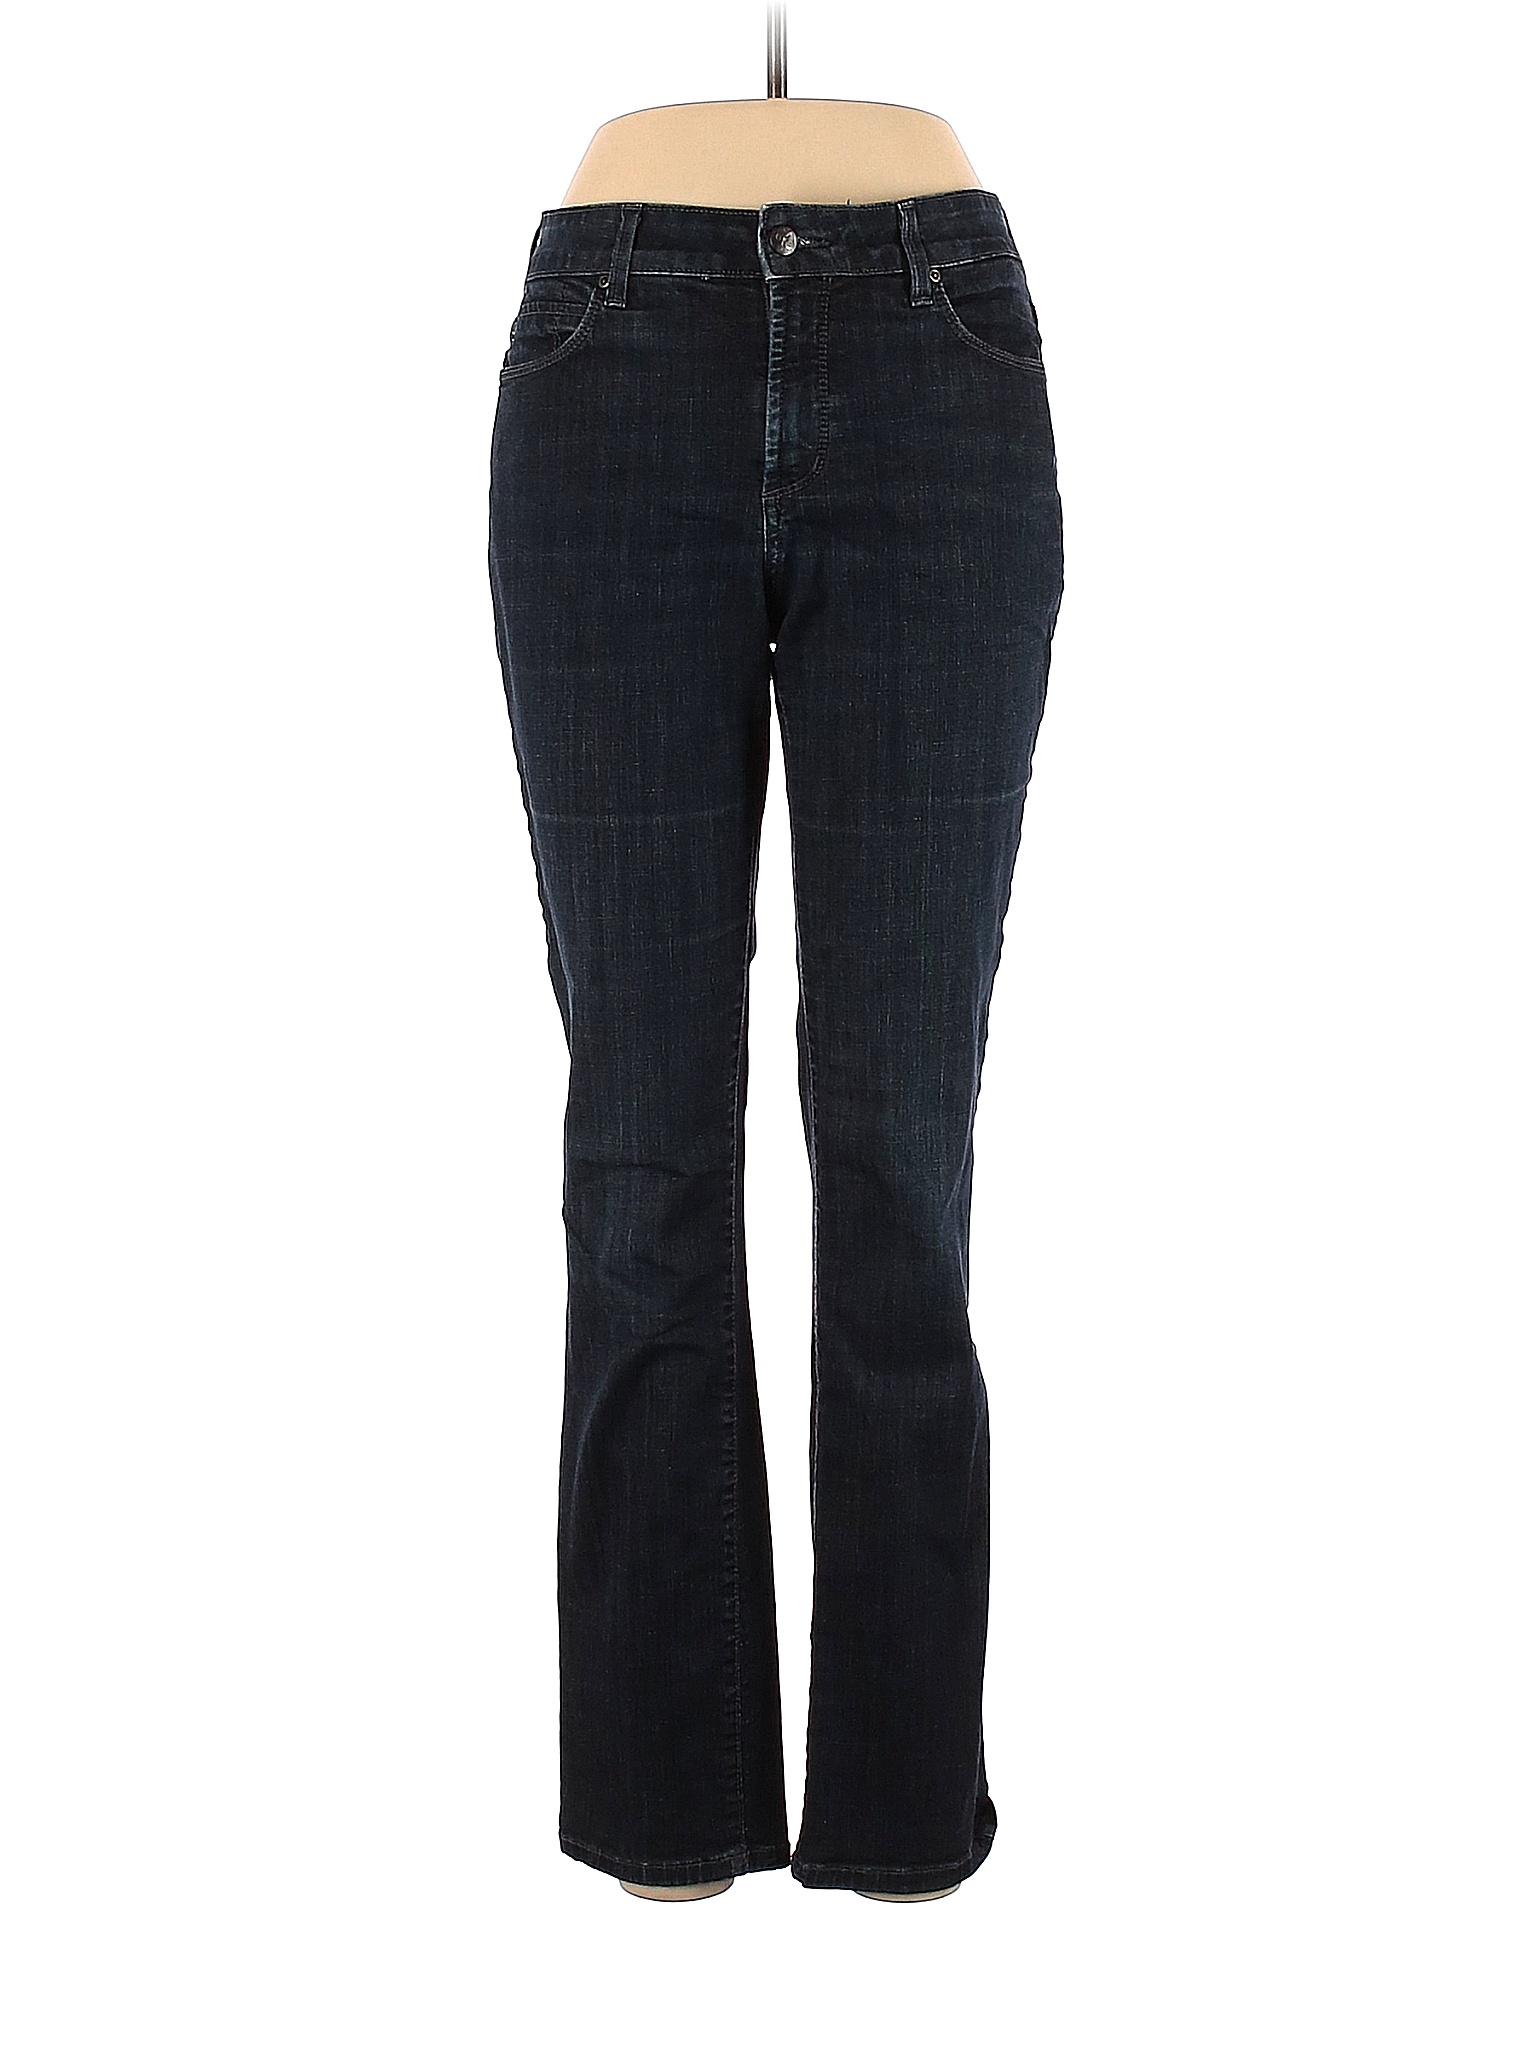 NYDJ Solid Blue Jeans Size 6 - 88% off | thredUP